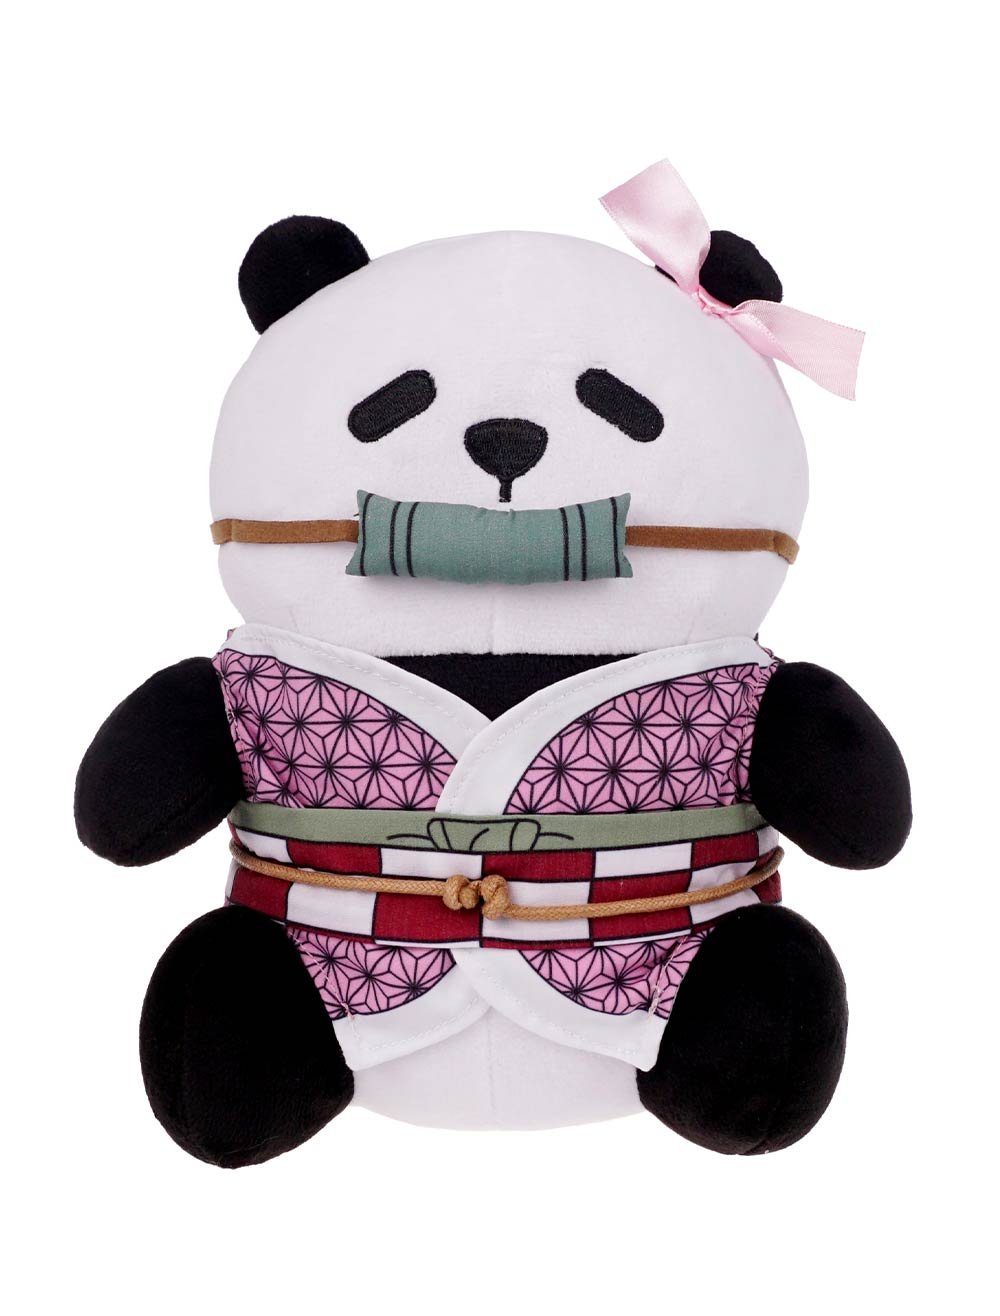 GalaxyCat Plüschfigur Süßes Nezuko Kamado Panda Plüschtier für Kimetsu no Yaiba Fans, 21cm (Plüschfigur), Panda Plüschtier im Nezuko Kostüm